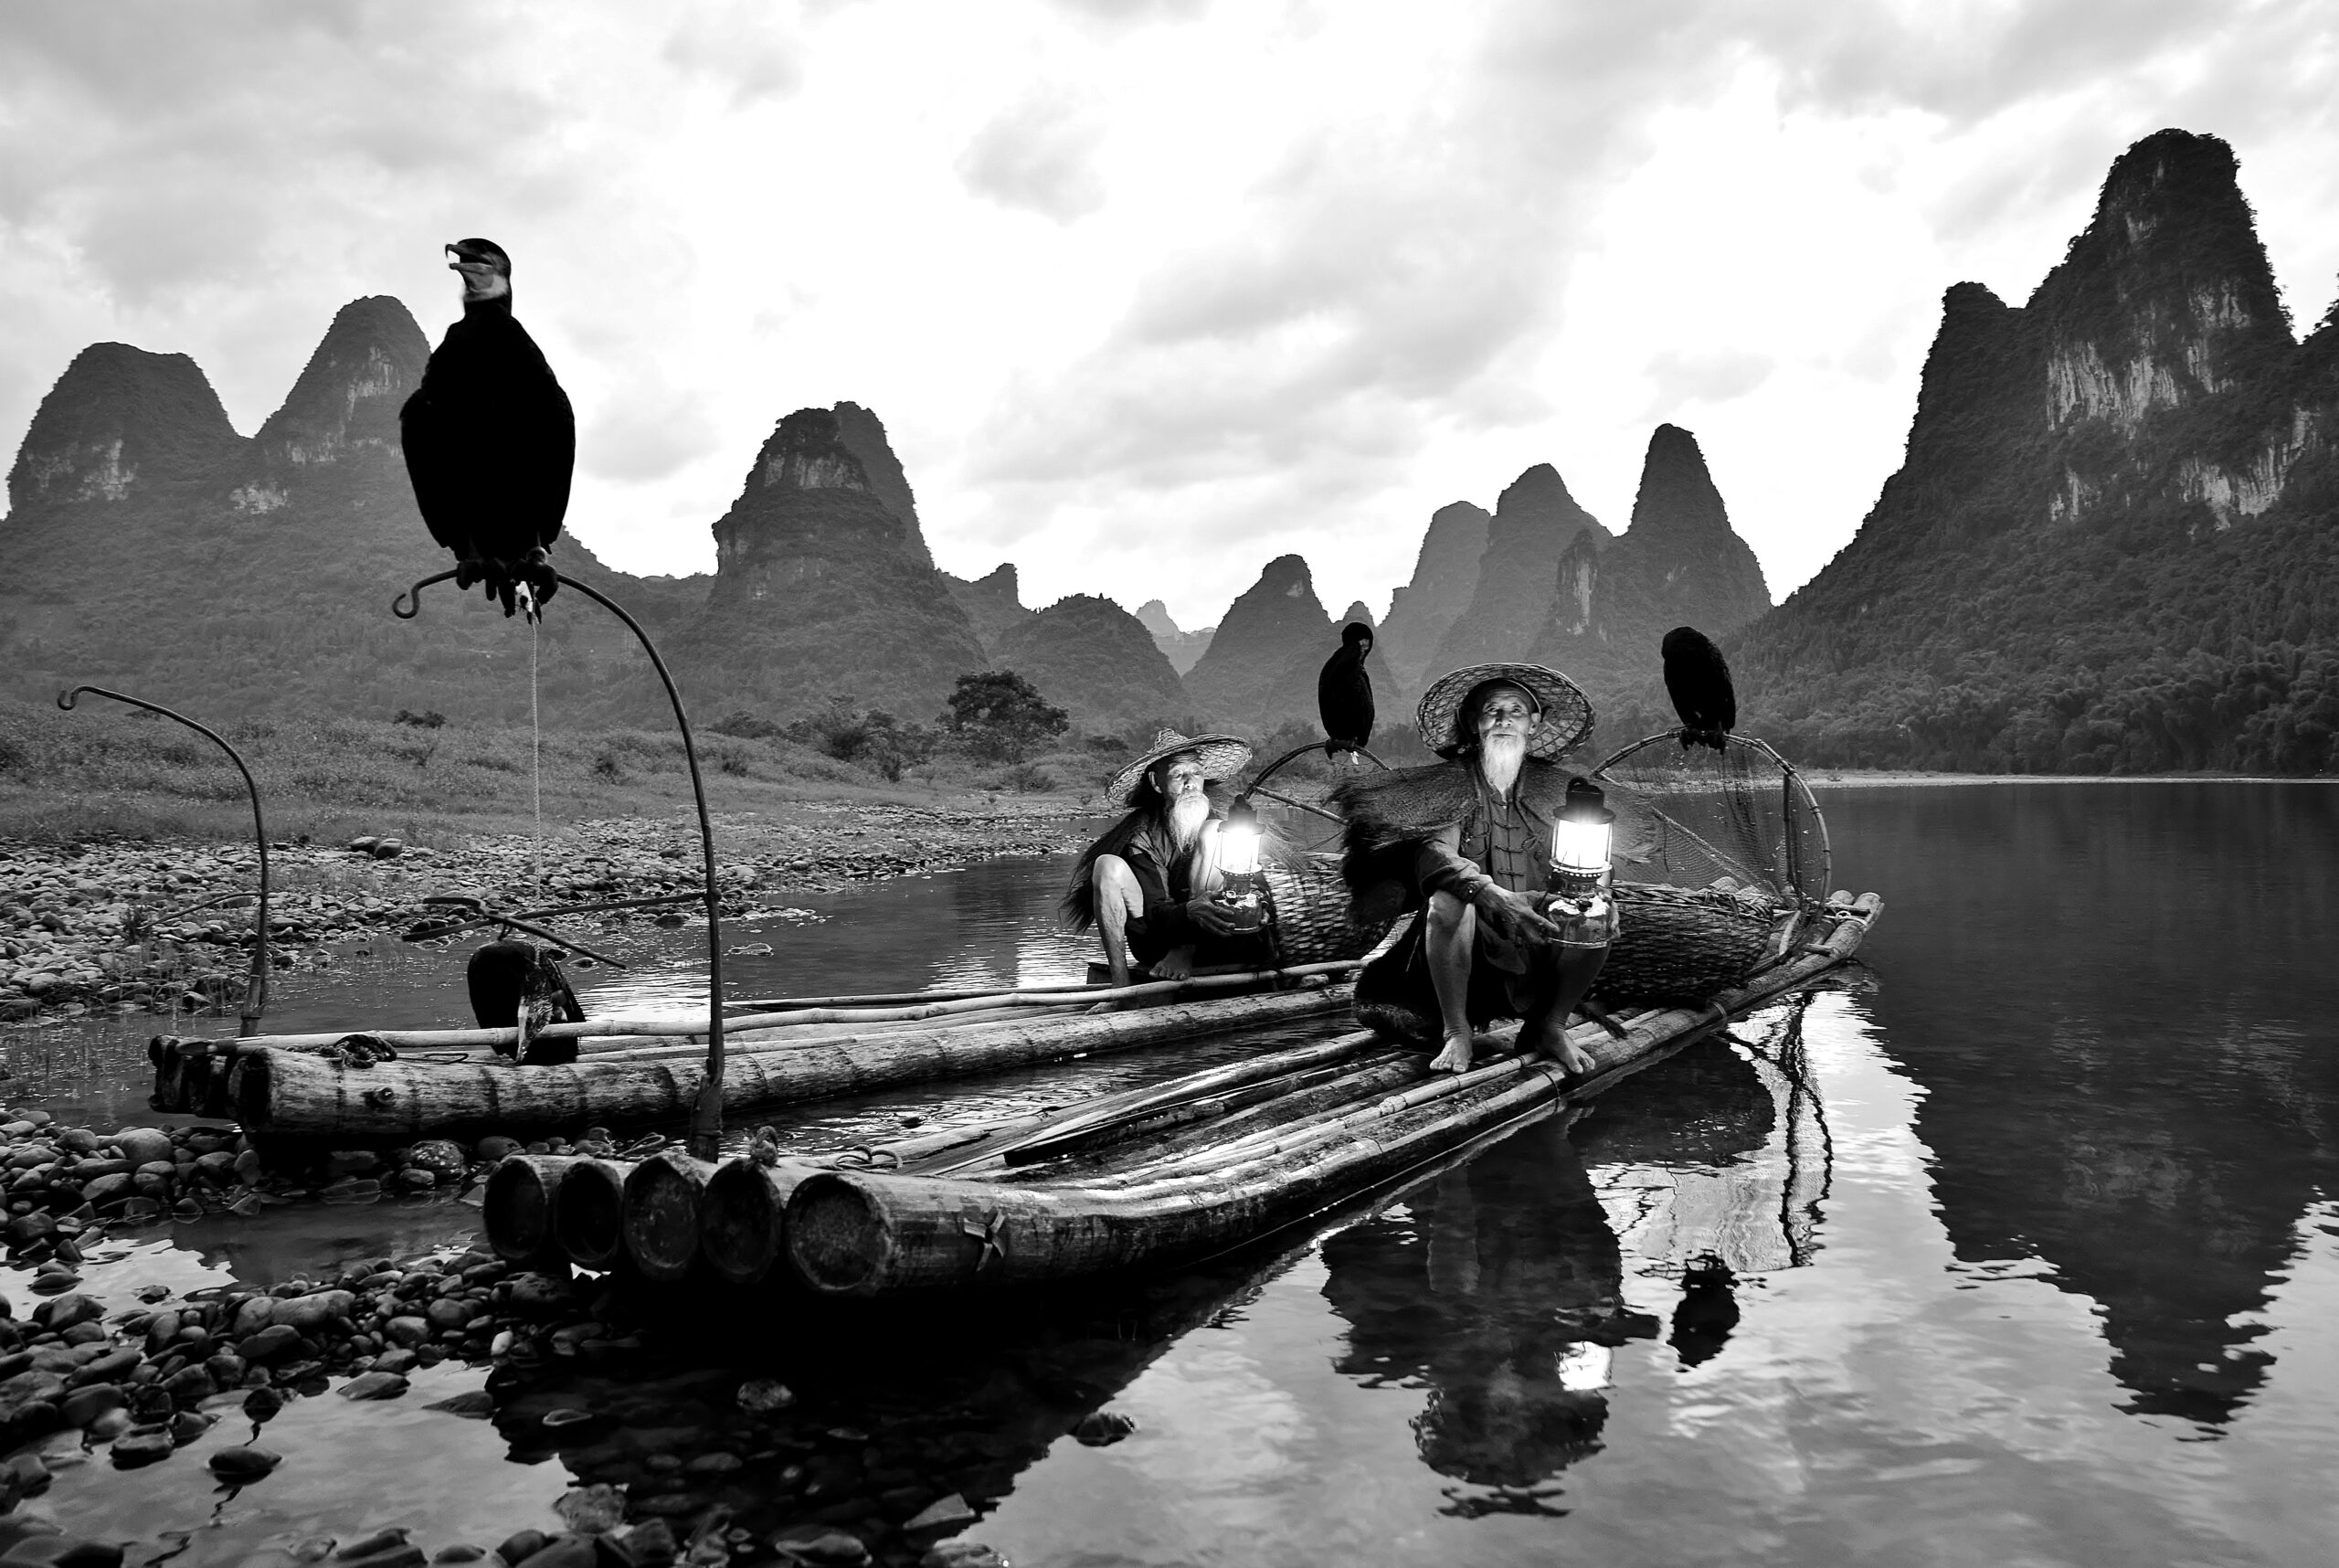 Cormorant fisherman brothers Huang in sunset at Li River, Yangshuo, Guangxi, China